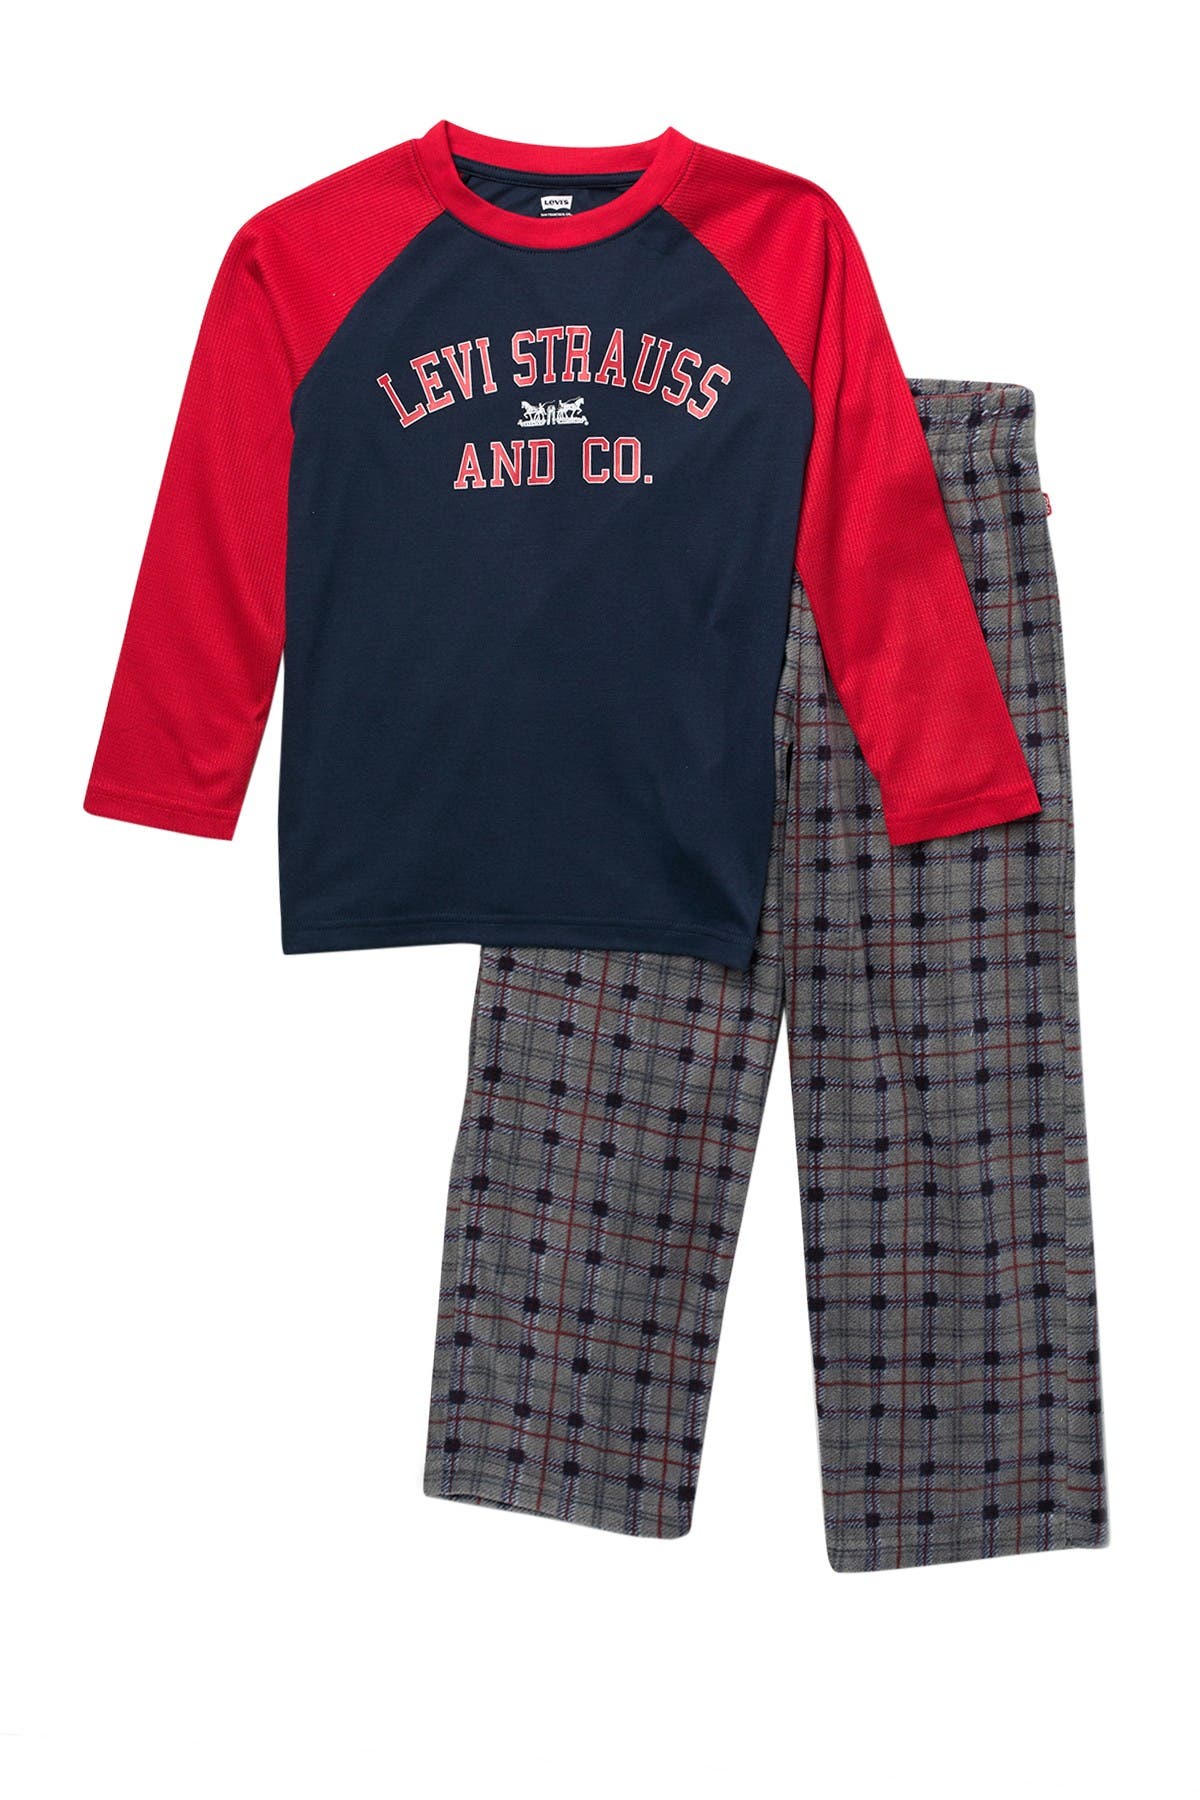 levi's pajama shirt